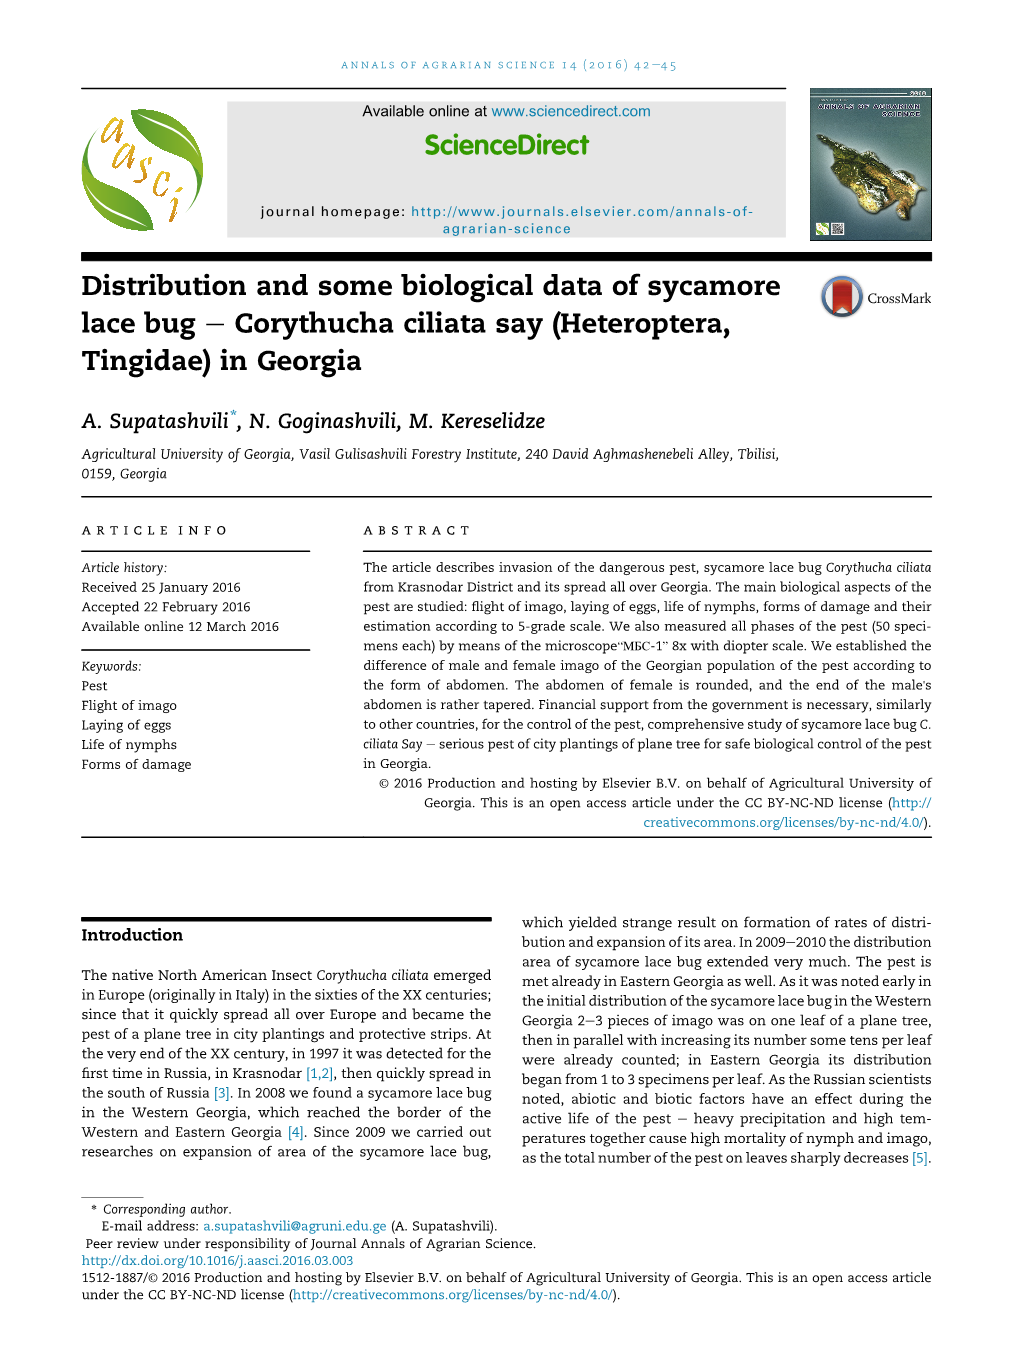 Distribution and Some Biological Data of Sycamore Lace Bug E Corythucha Ciliata Say (Heteroptera, Tingidae) in Georgia